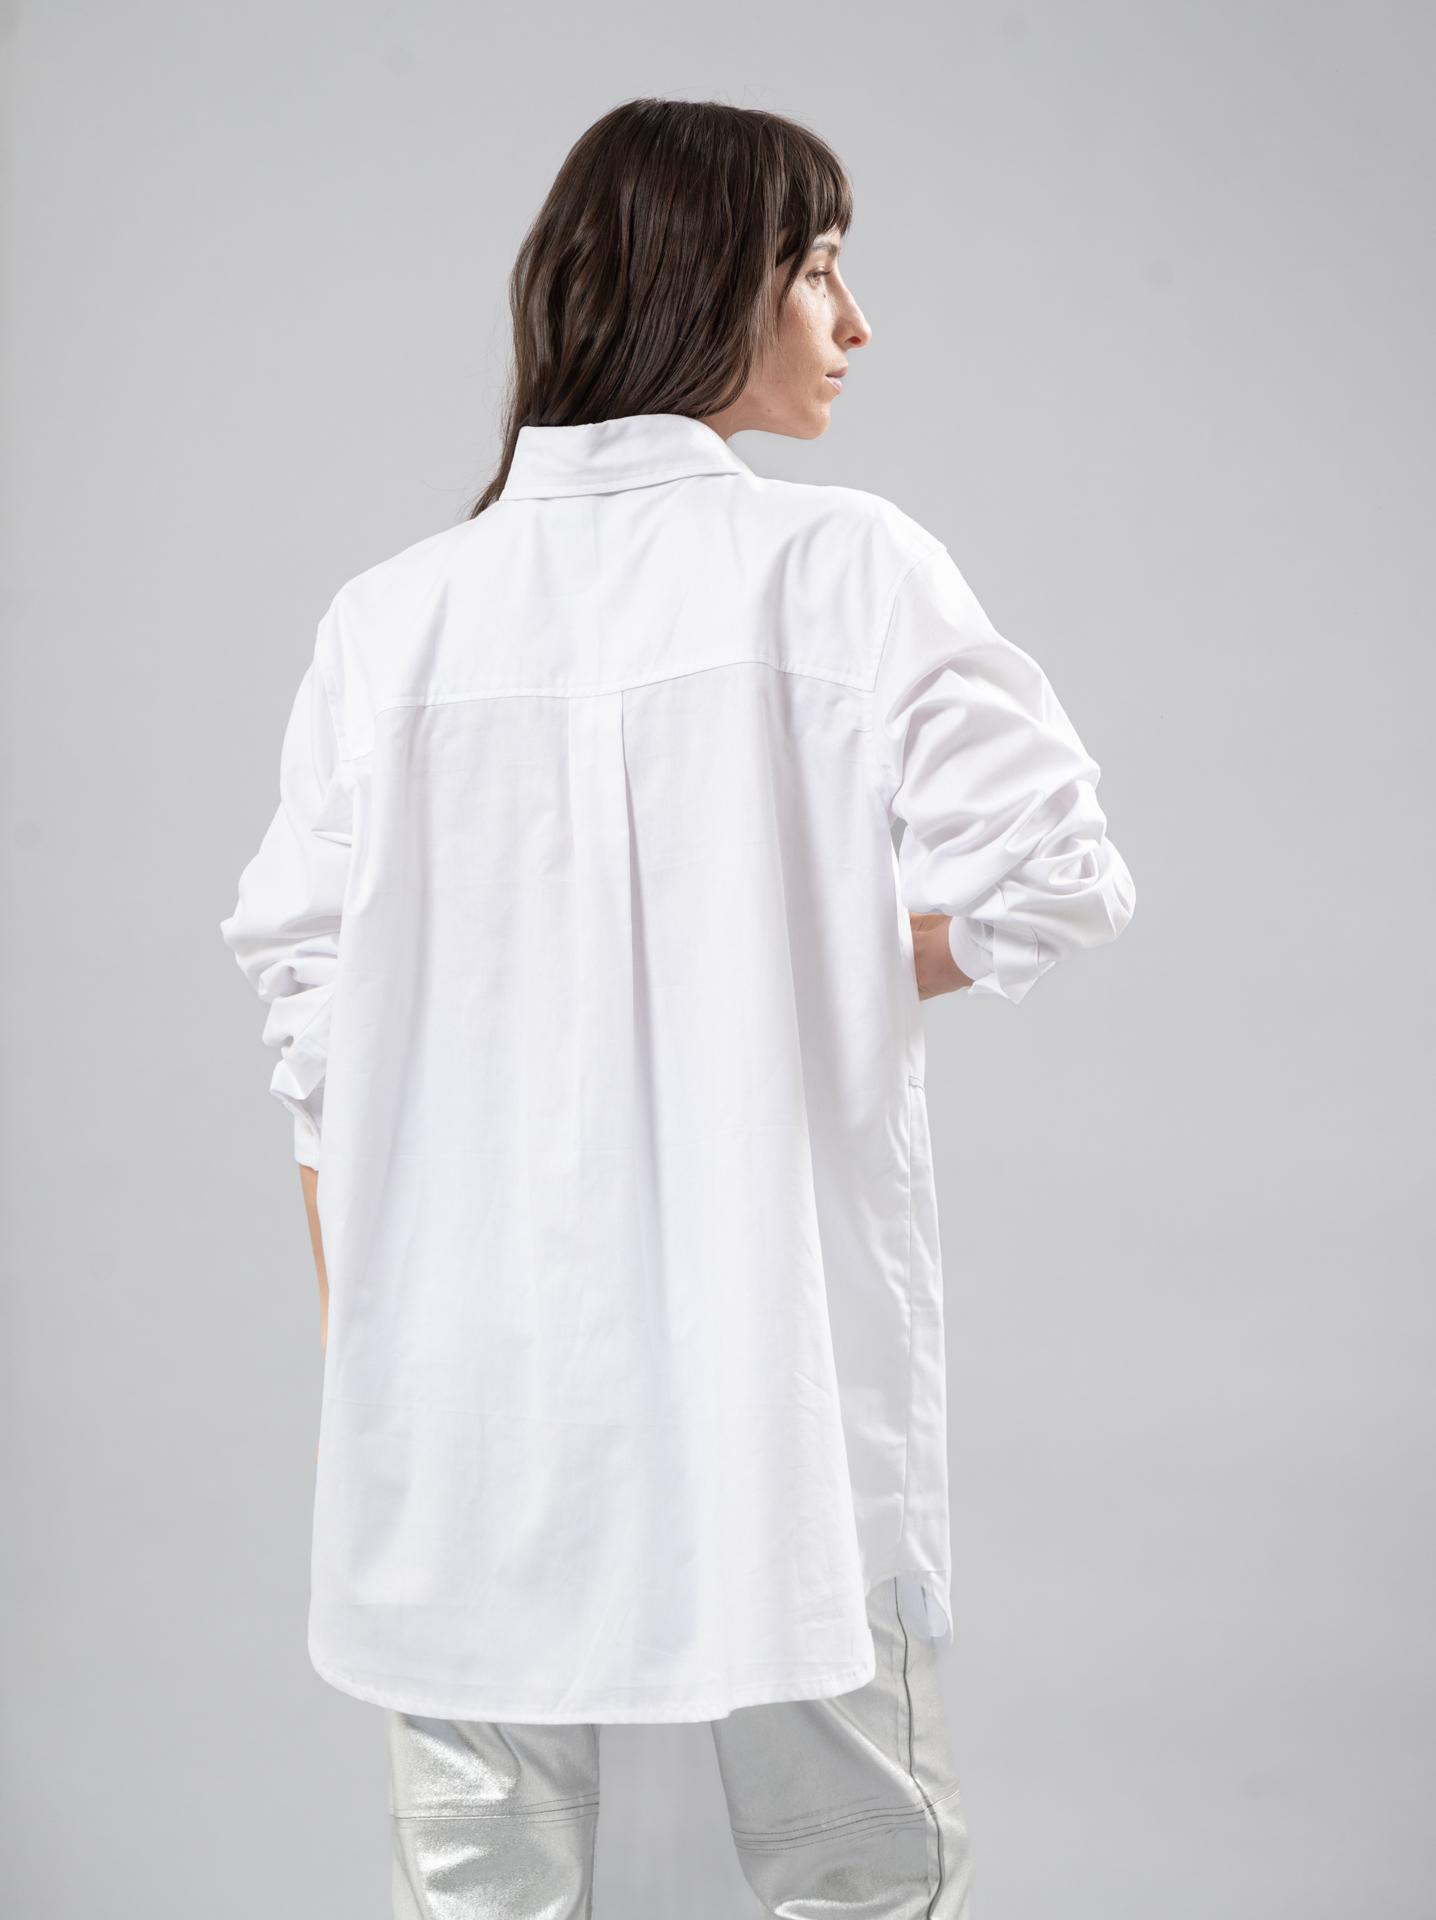 Camisa Fausta blanco talle unico